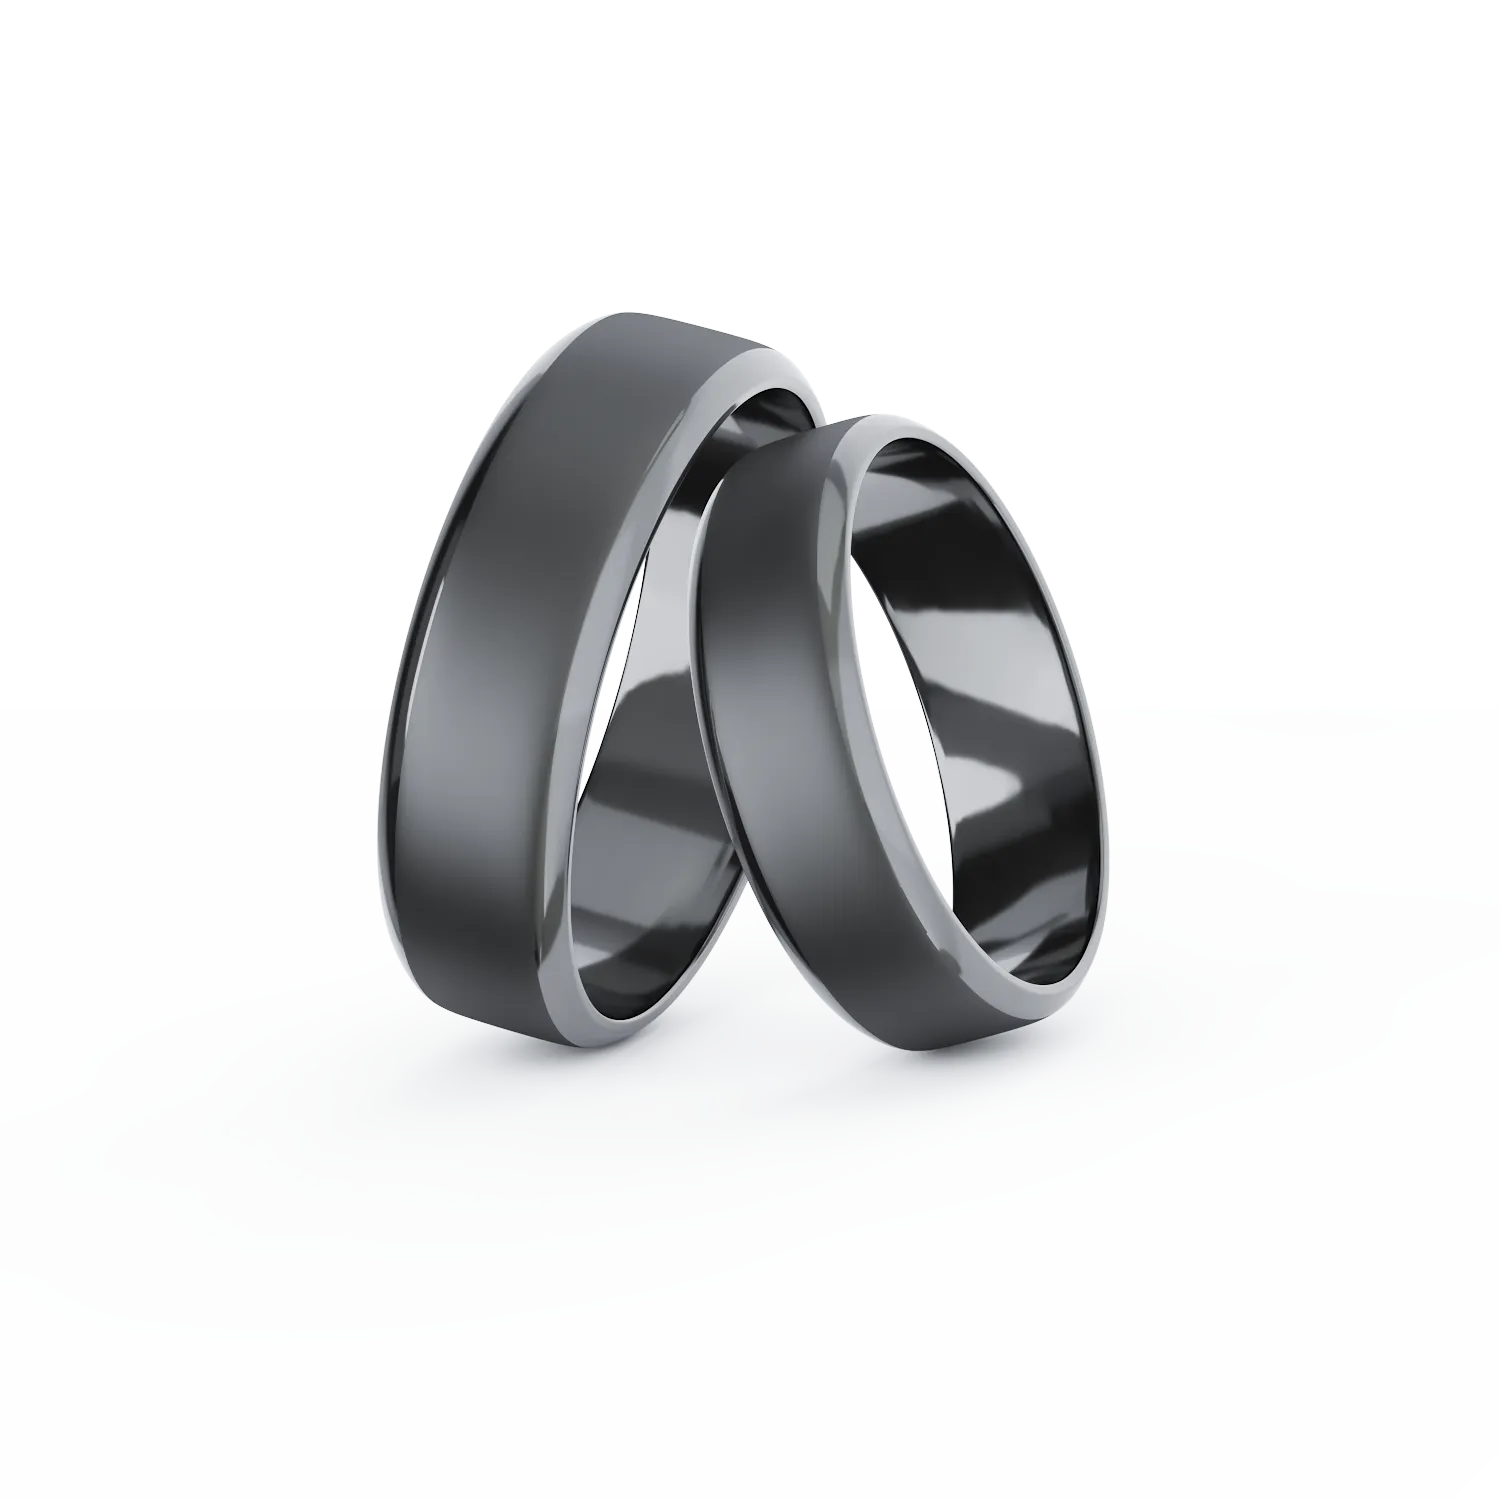 DEVOTION tantalum wedding rings